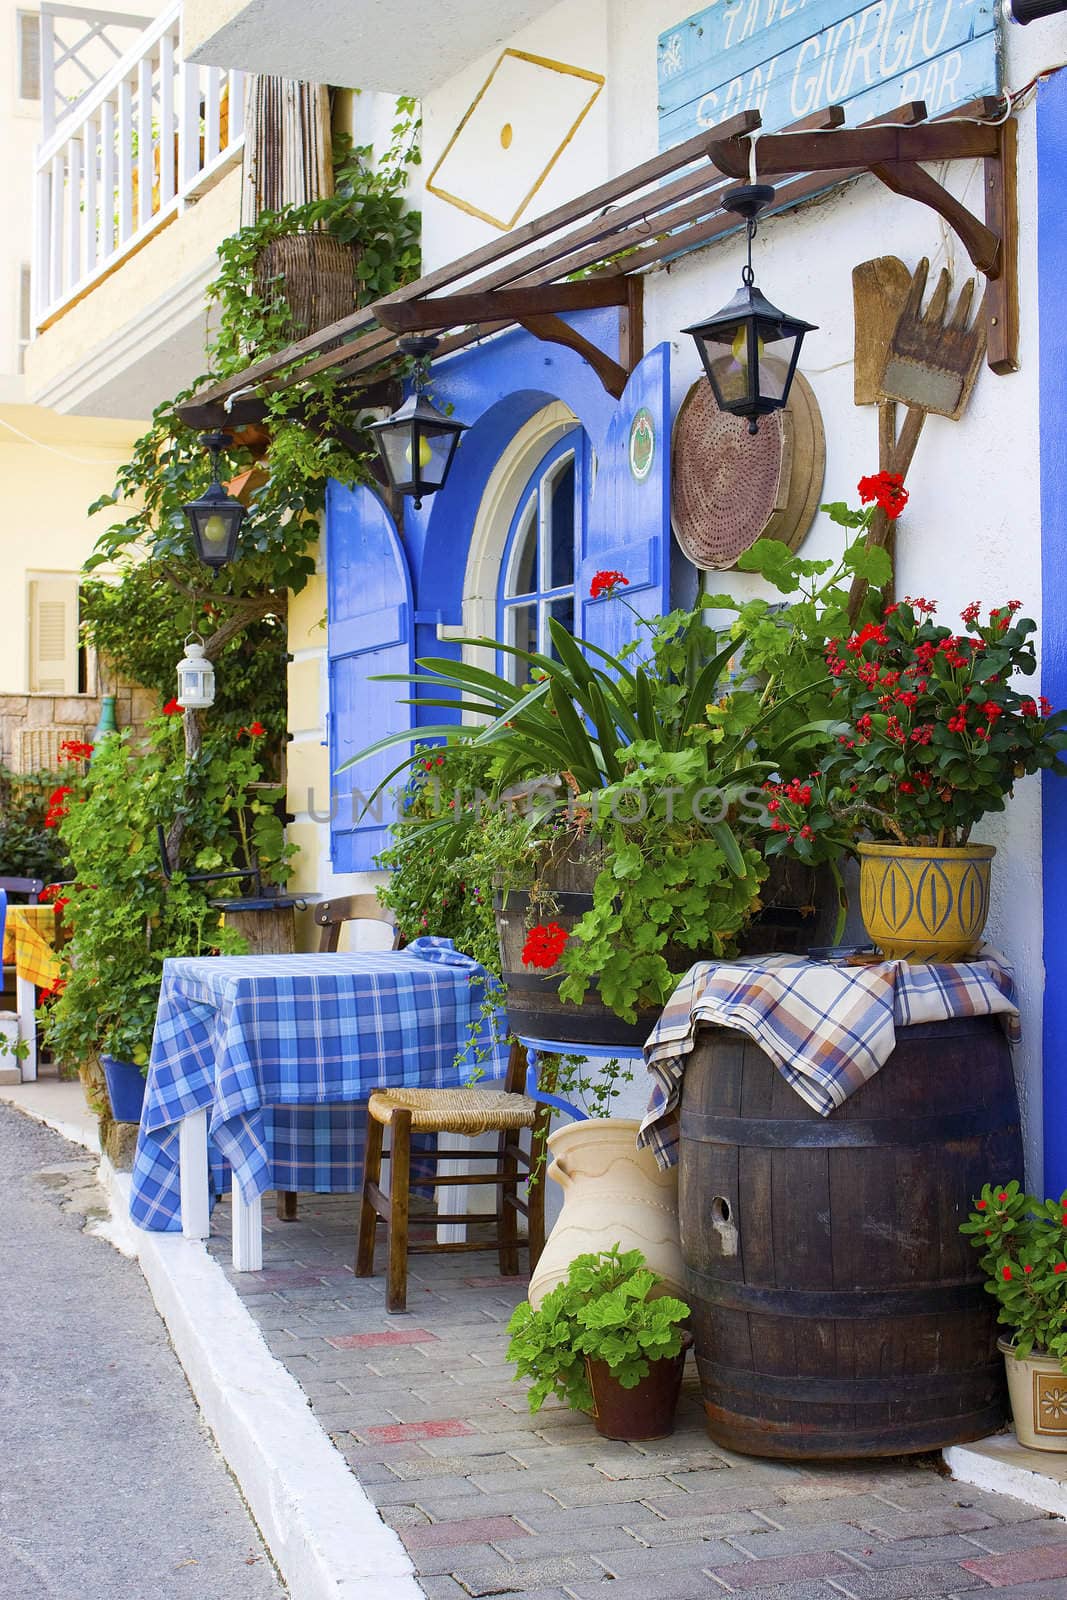 Taverna in Malia, Crete by miradrozdowski